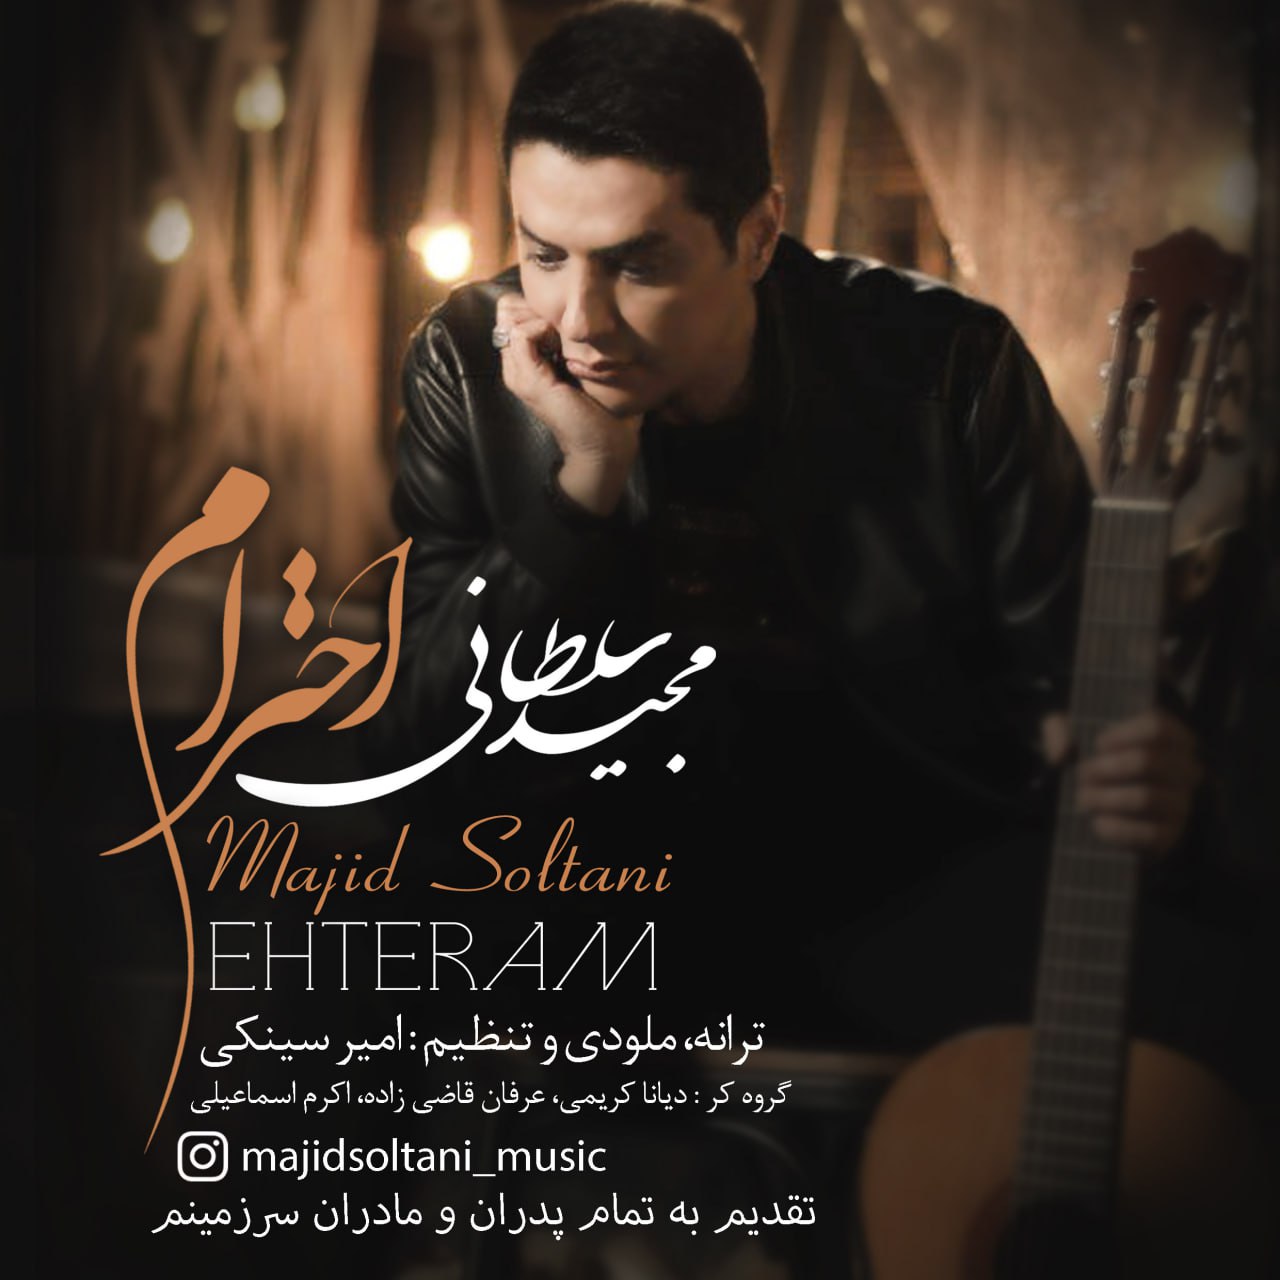 Majid Soltani – Ehteram